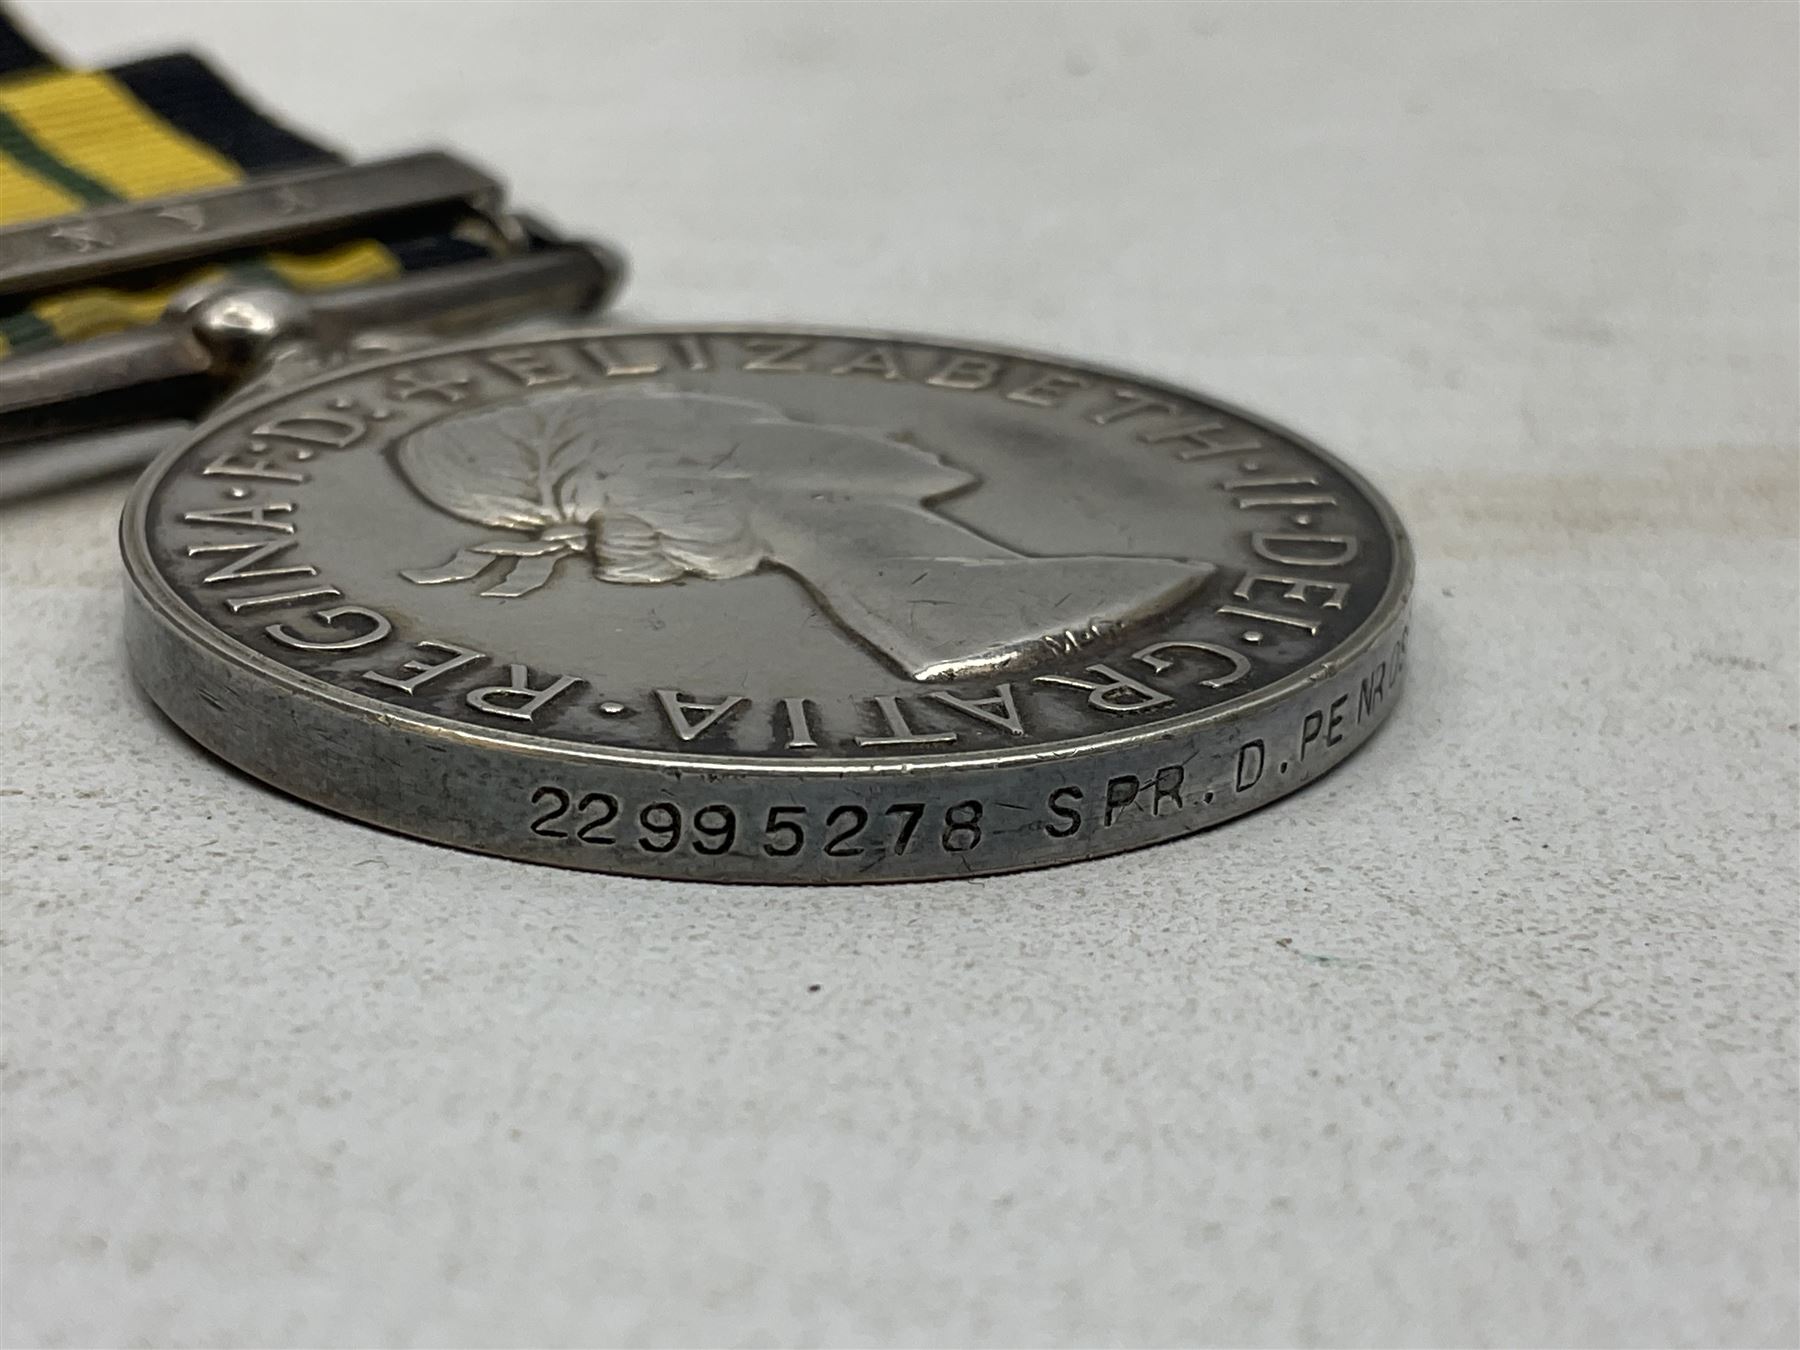 Elizabeth II Africa General Service Medal with Kenya clasp awarded to 22995278 Spr. D. Penrose R.E.; - Image 4 of 7